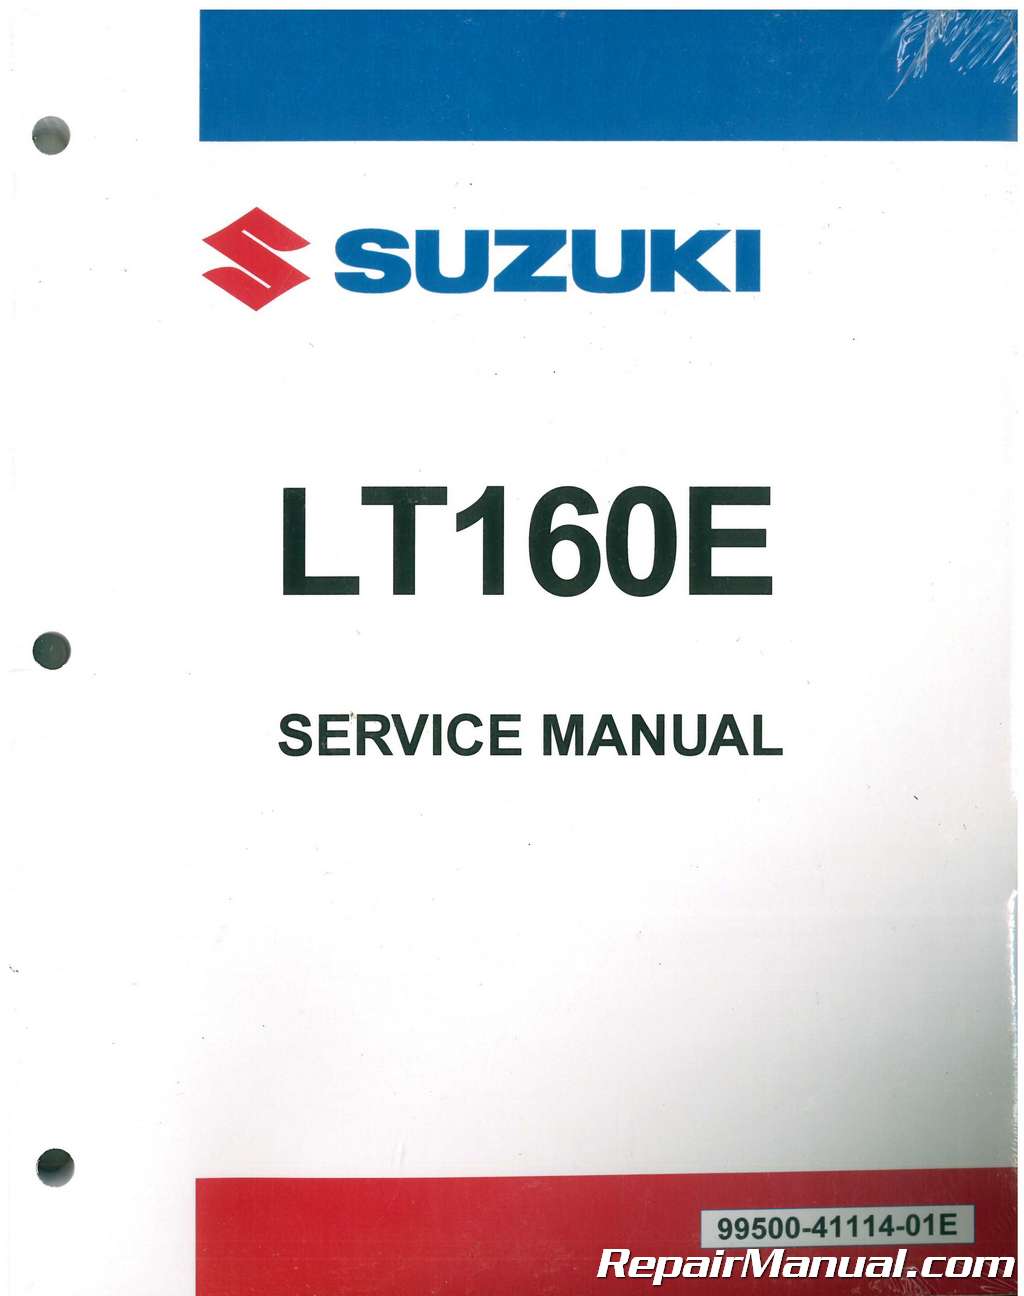 Yingshop Ignition Key Switch Compatible for Suzuki LTF160 LT-F160 LTF-160 LT160 LT160E LT-160E LT230E LT-230E LTF250 LT-F250 LT300E LT-300E Quadrunner Quad Runner 160 230 250 300 1991-2001 